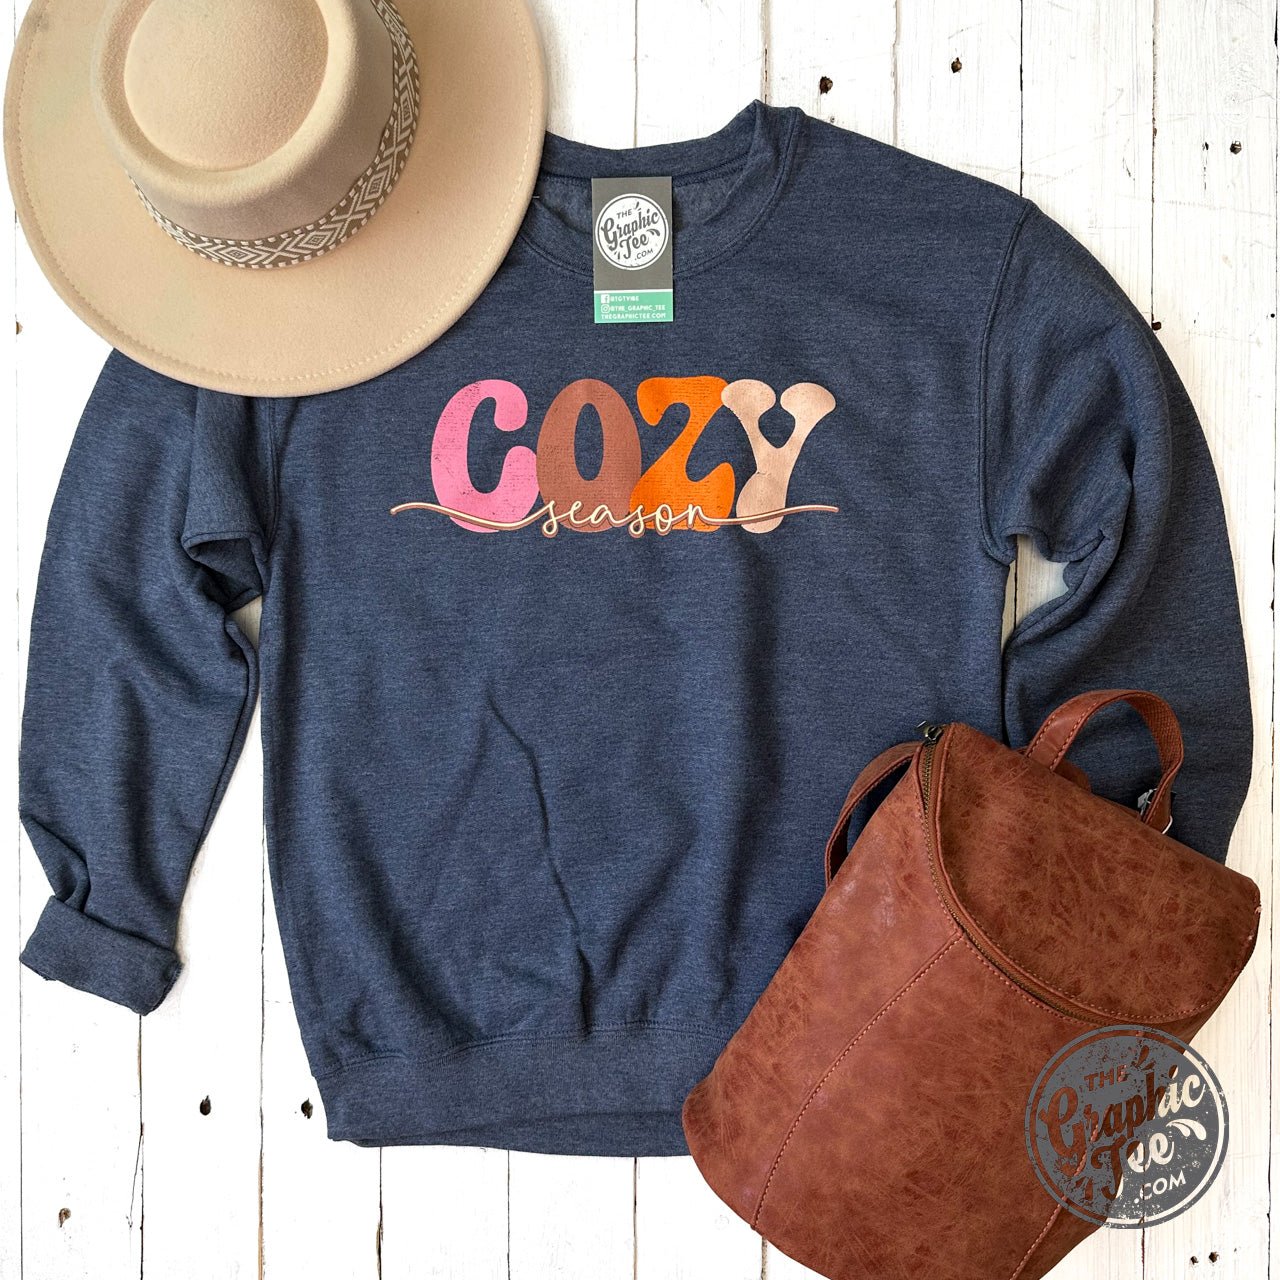 Cozy Season Crewneck Sweatshirt - The Graphic Tee